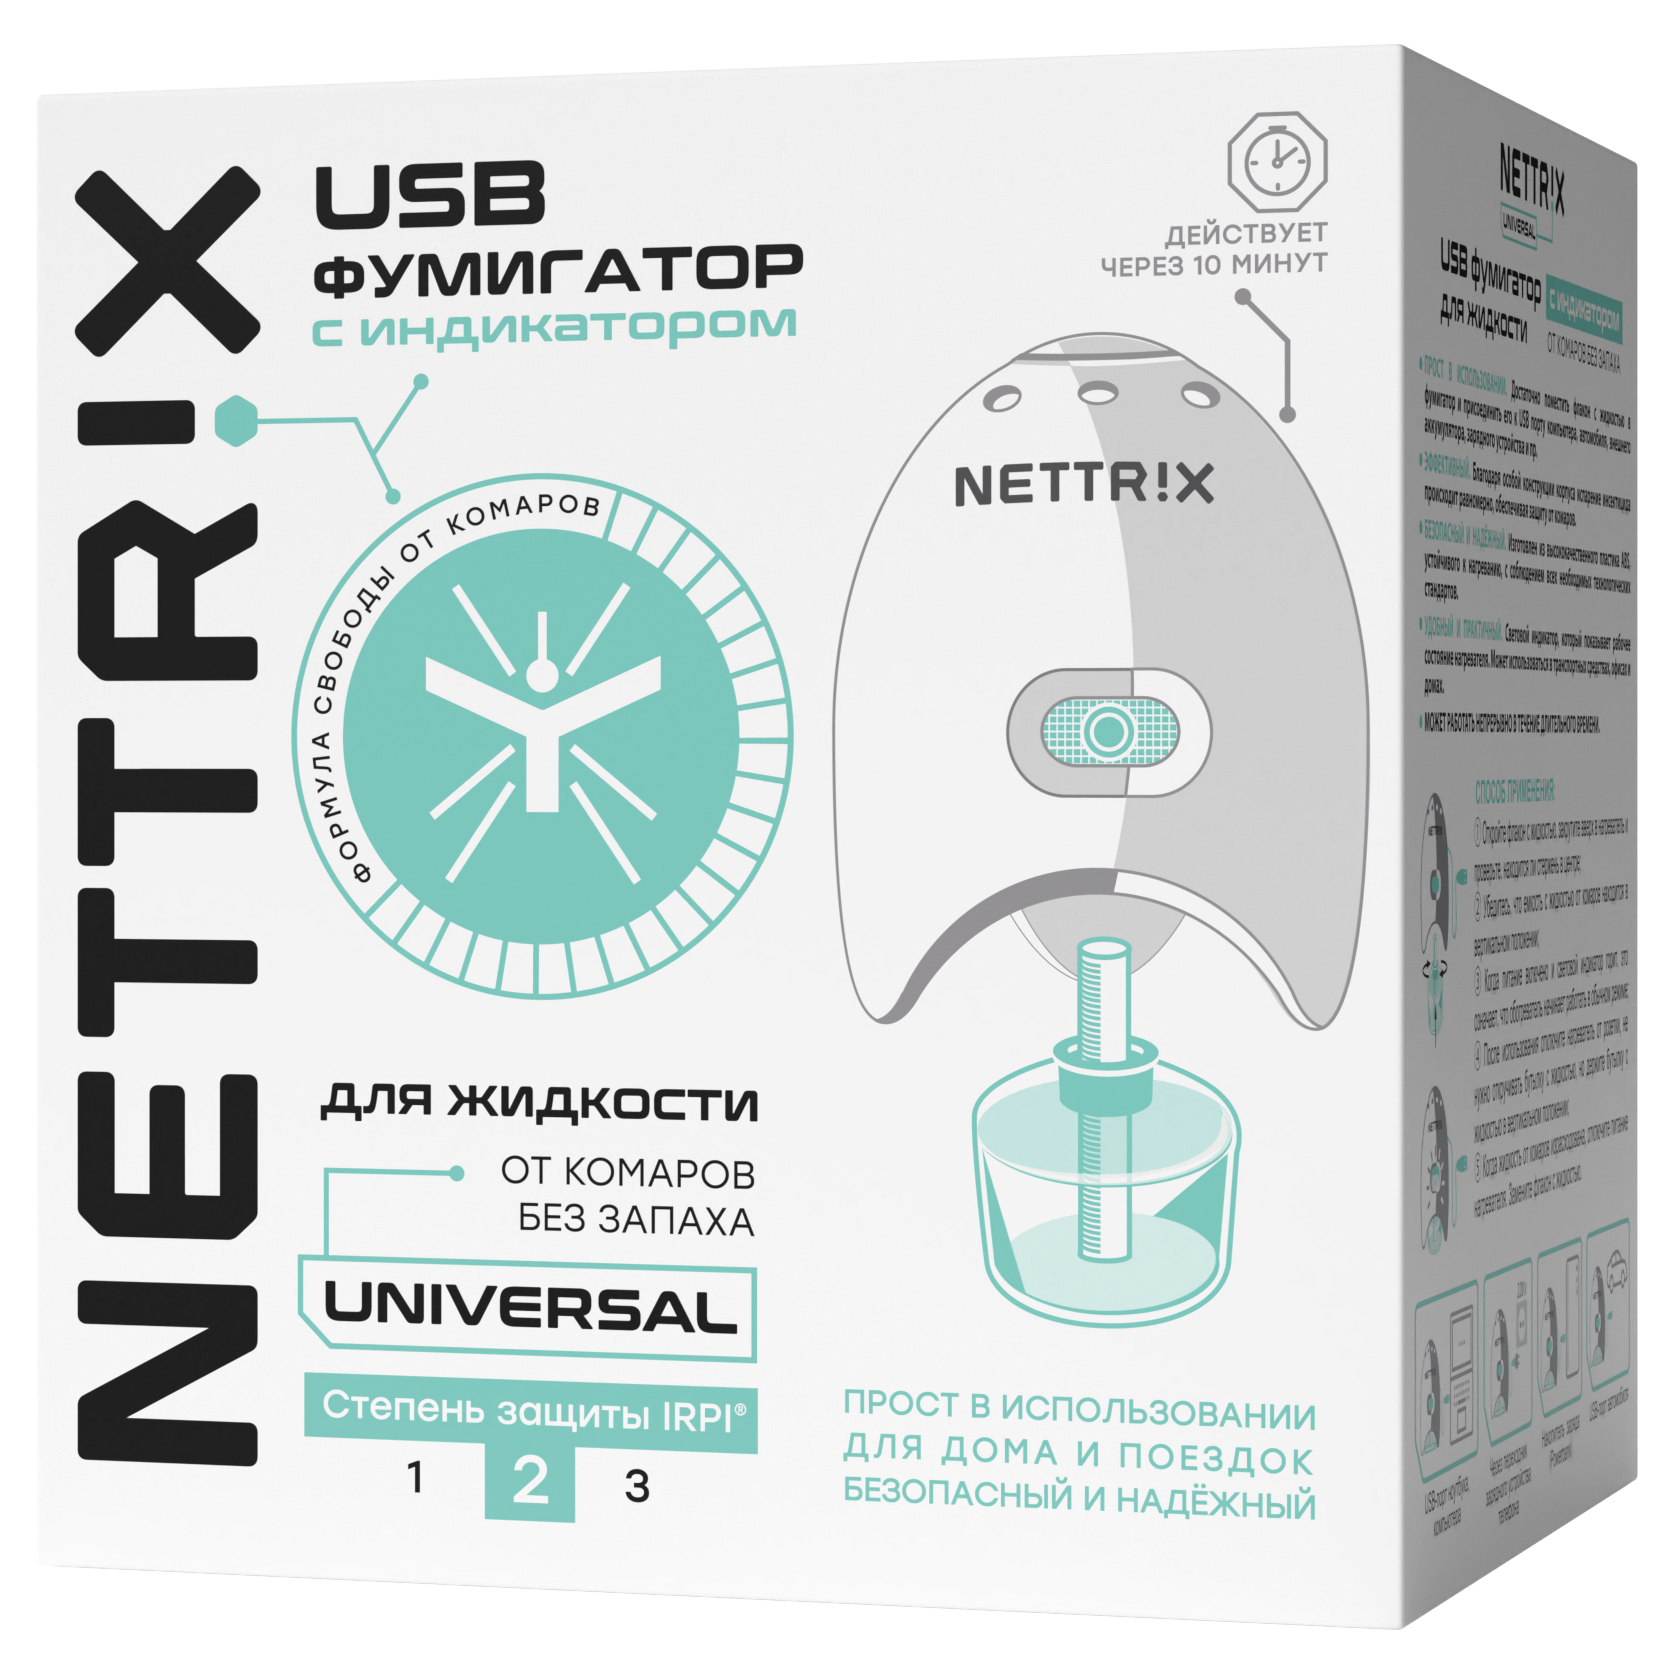 Фумигатор USB Nettrix Universal для жидкостей